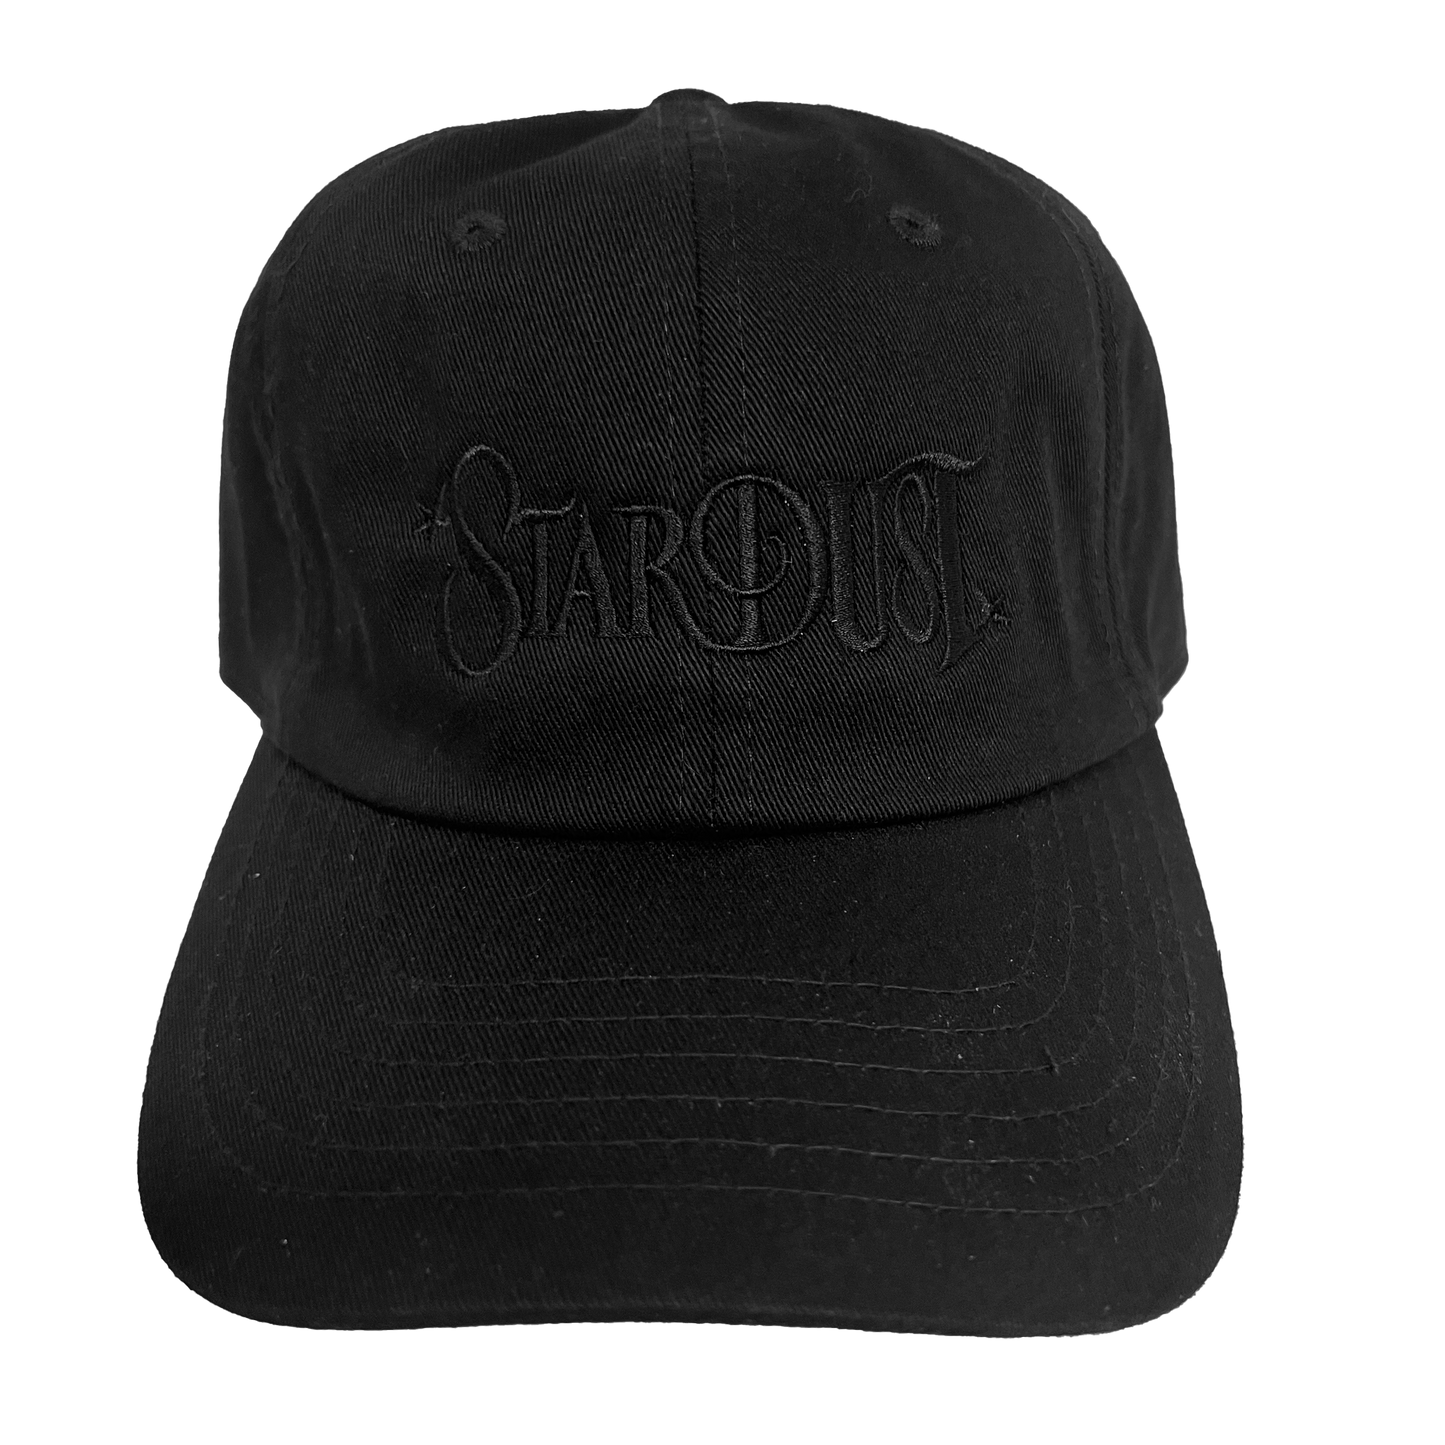 Stardust Wanderlust II Dad Hat 004 Black / Black